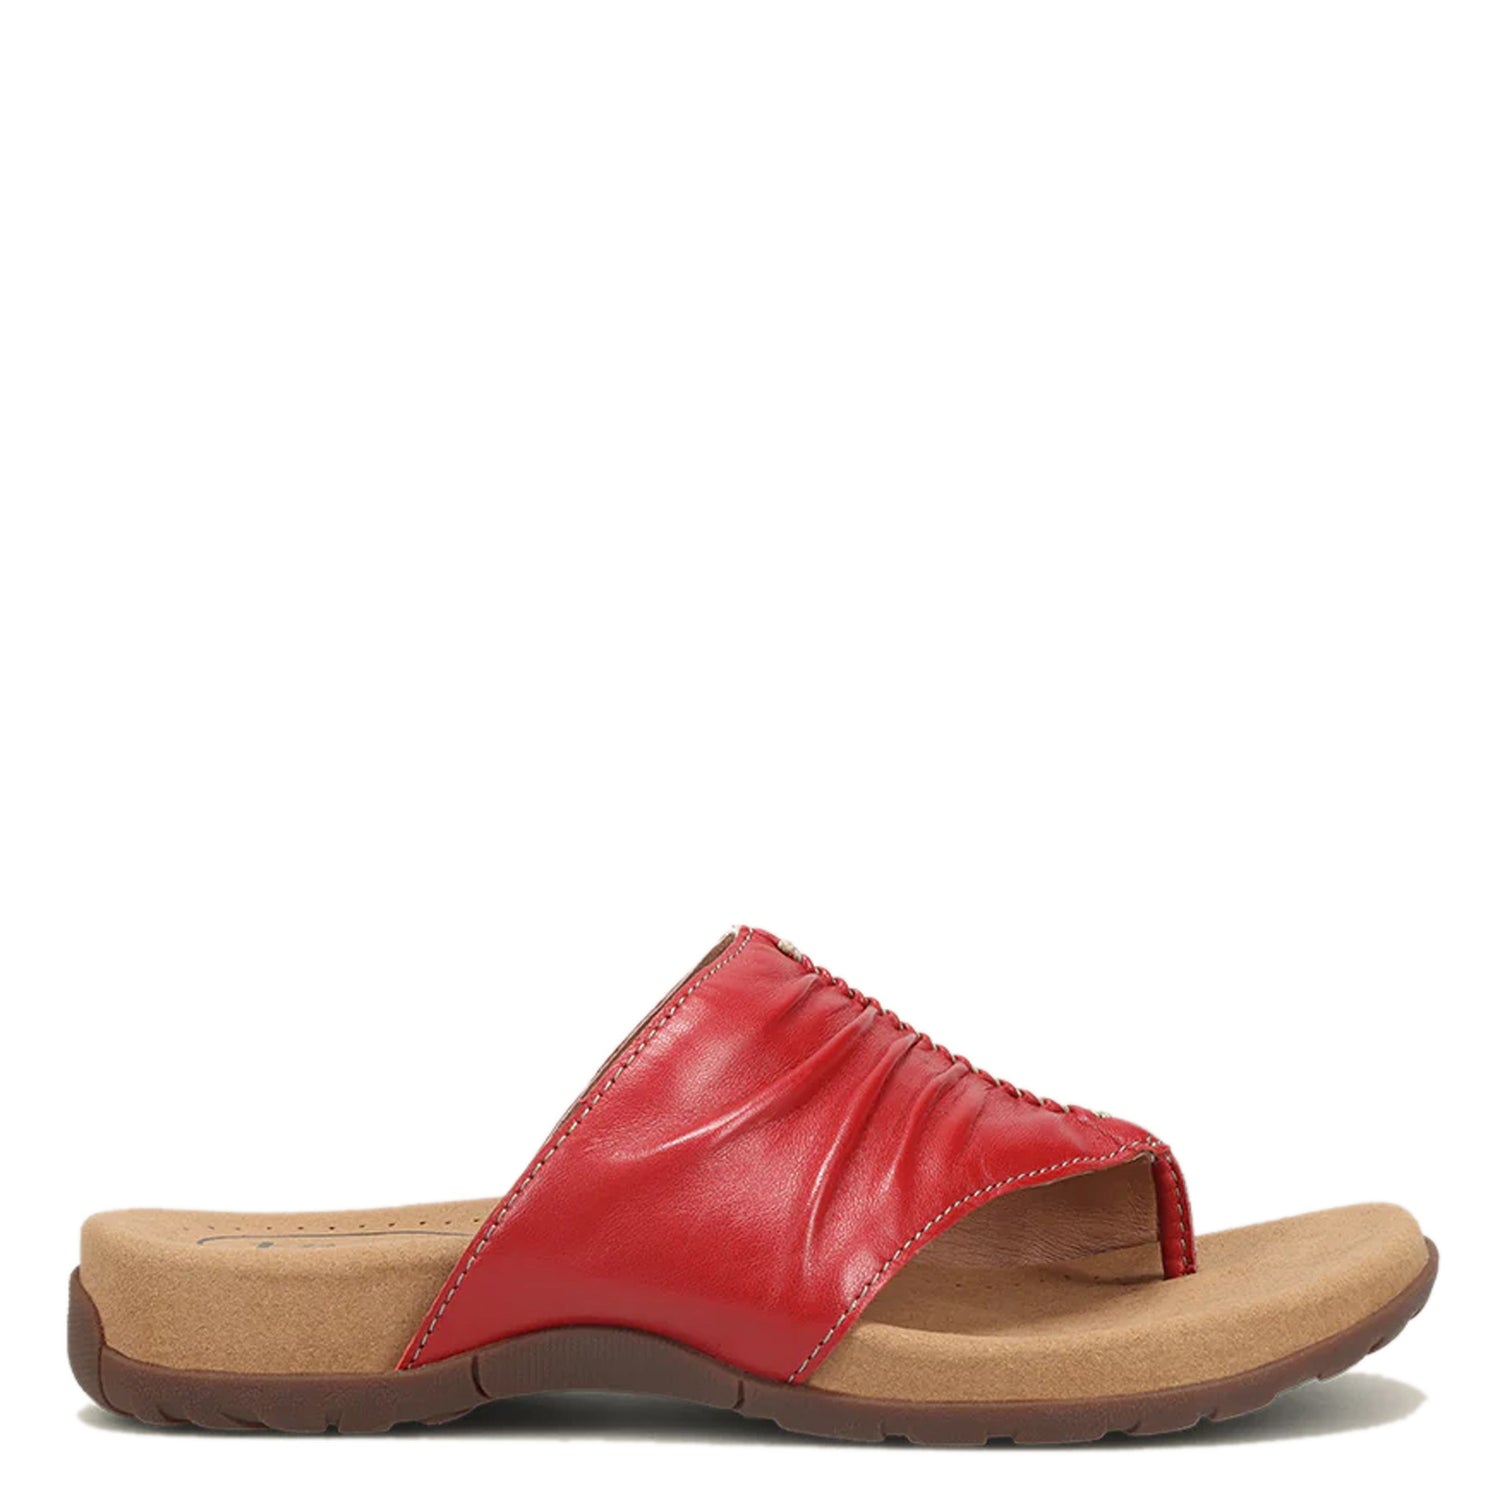 Peltz Shoes  Women's Taos Gift 2 Sandal Red GT2-12045-RED